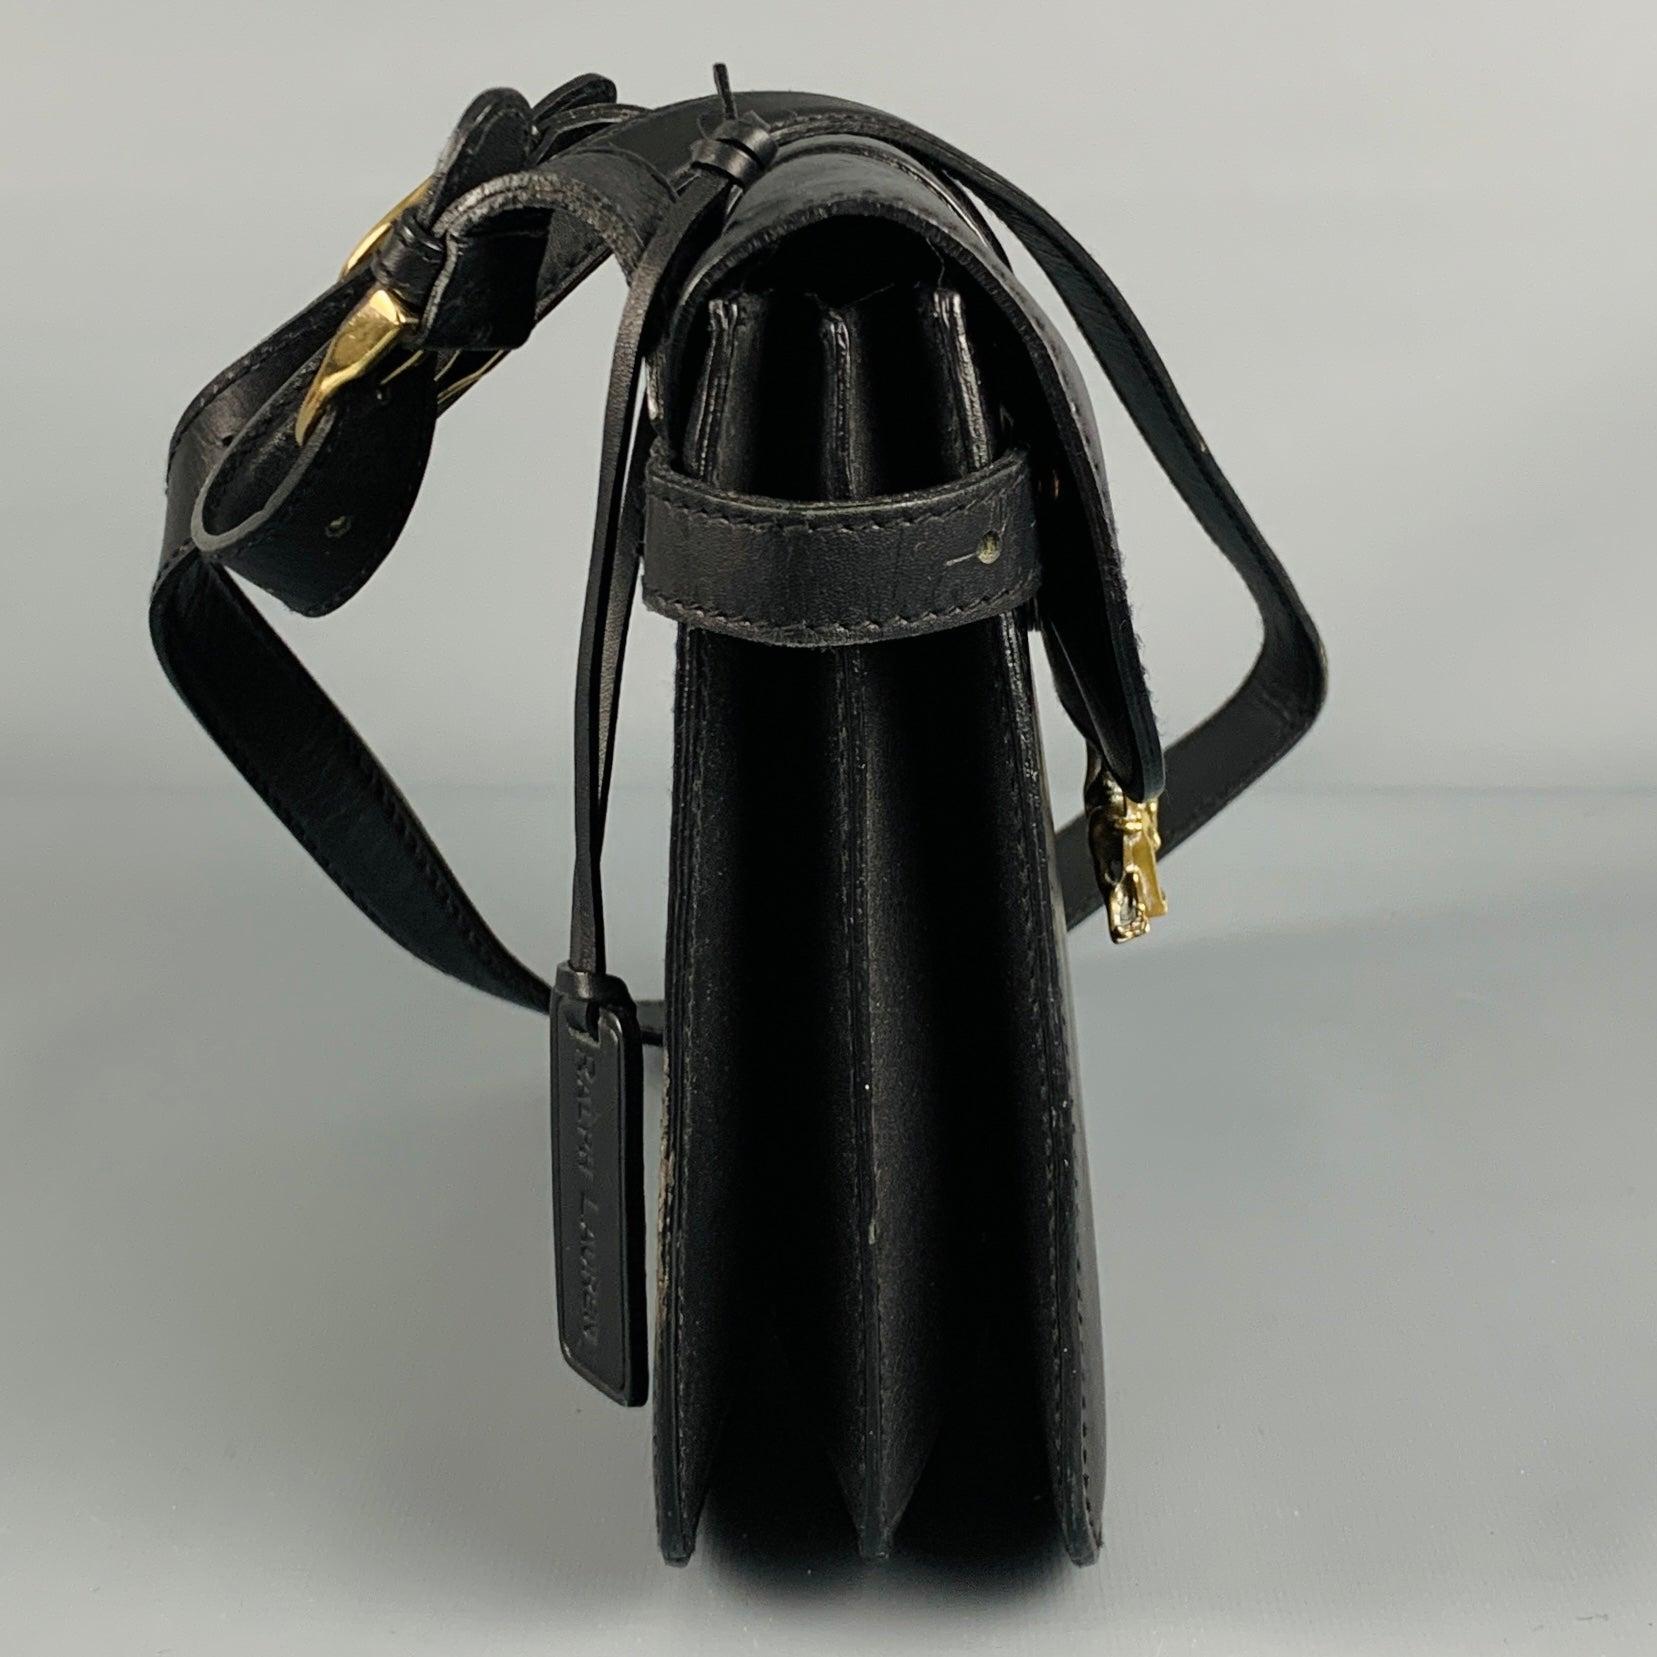 RALPH LAUREN Black Equestrian Leather Shoulder Bag Handbag In Good Condition For Sale In San Francisco, CA